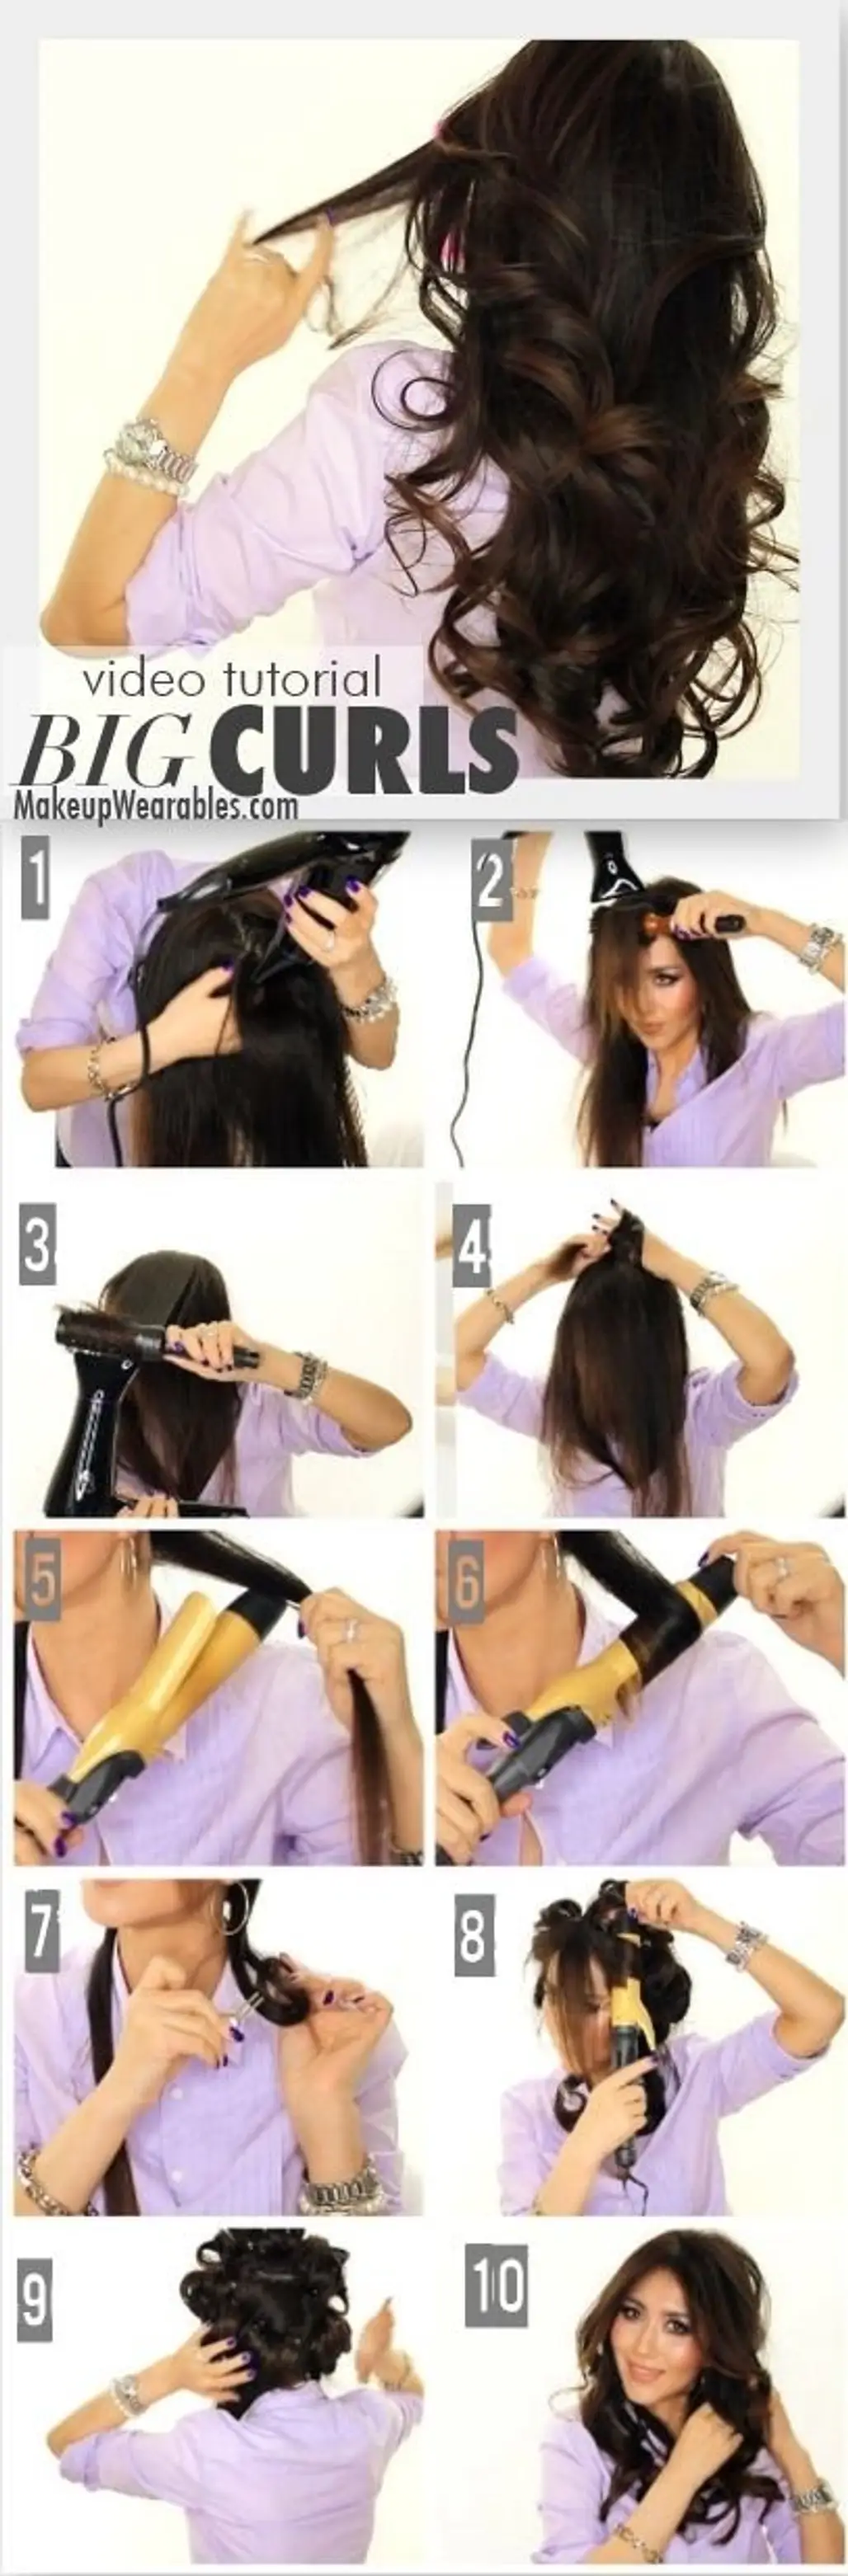 How to Get Big Curls